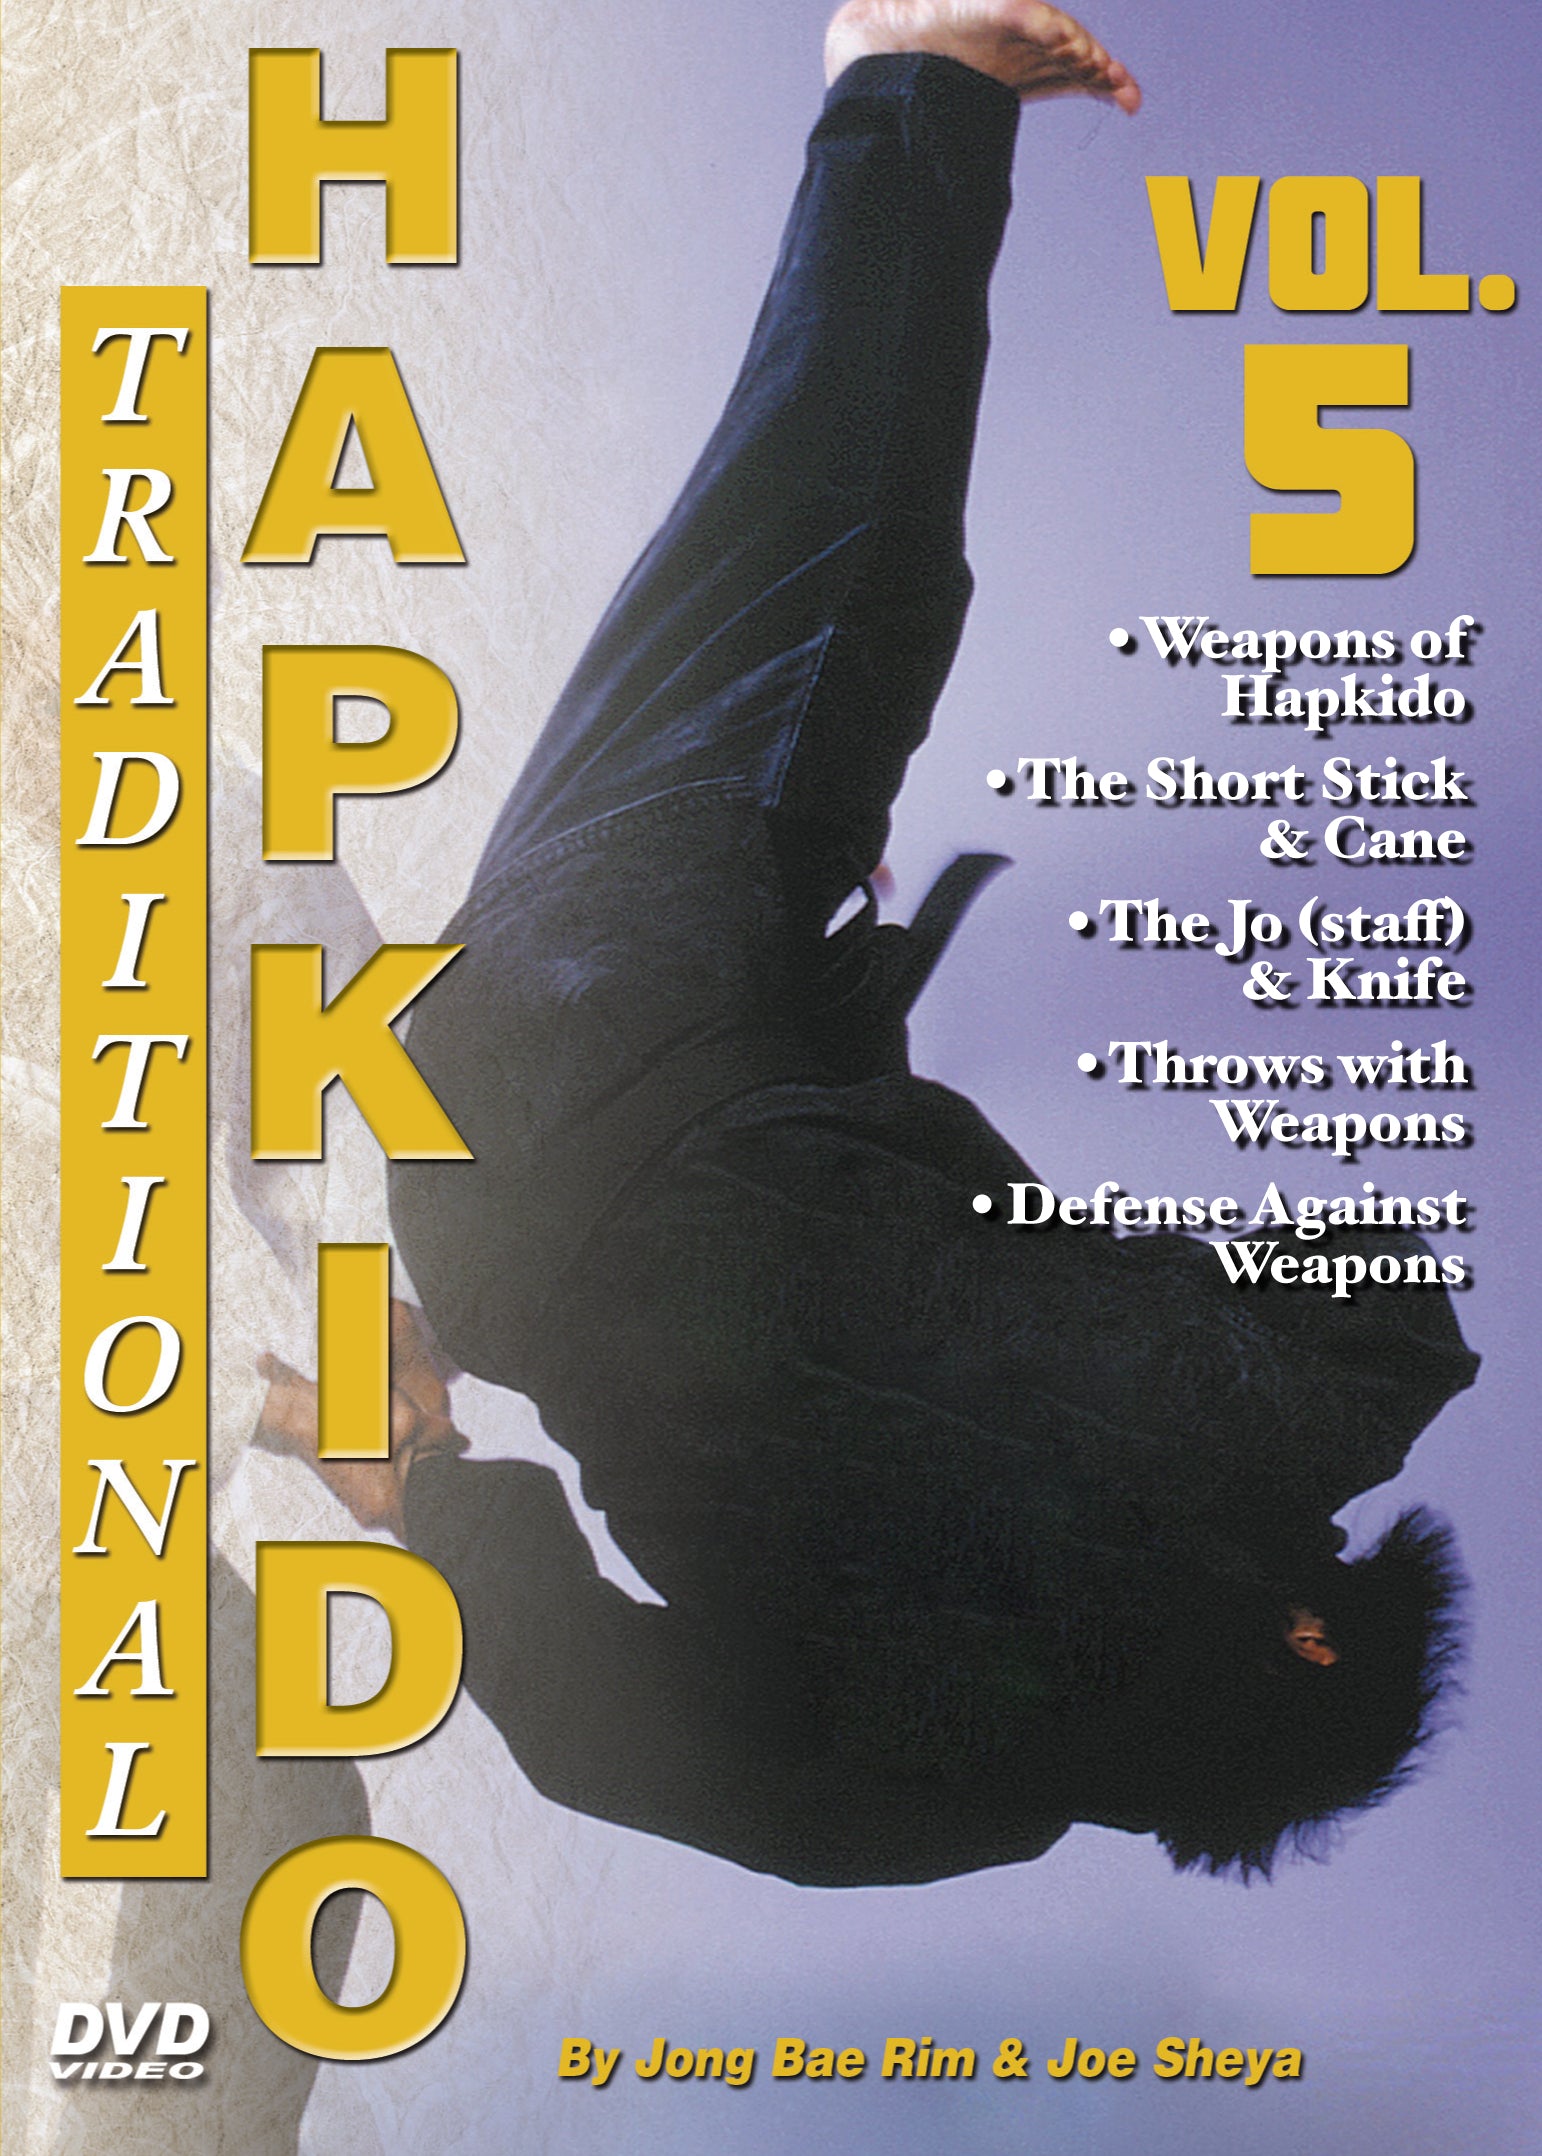 Traditional Hapkido #5 Weapons Short Stick Cane Staff Knife DVD GM Jong Bae Rim